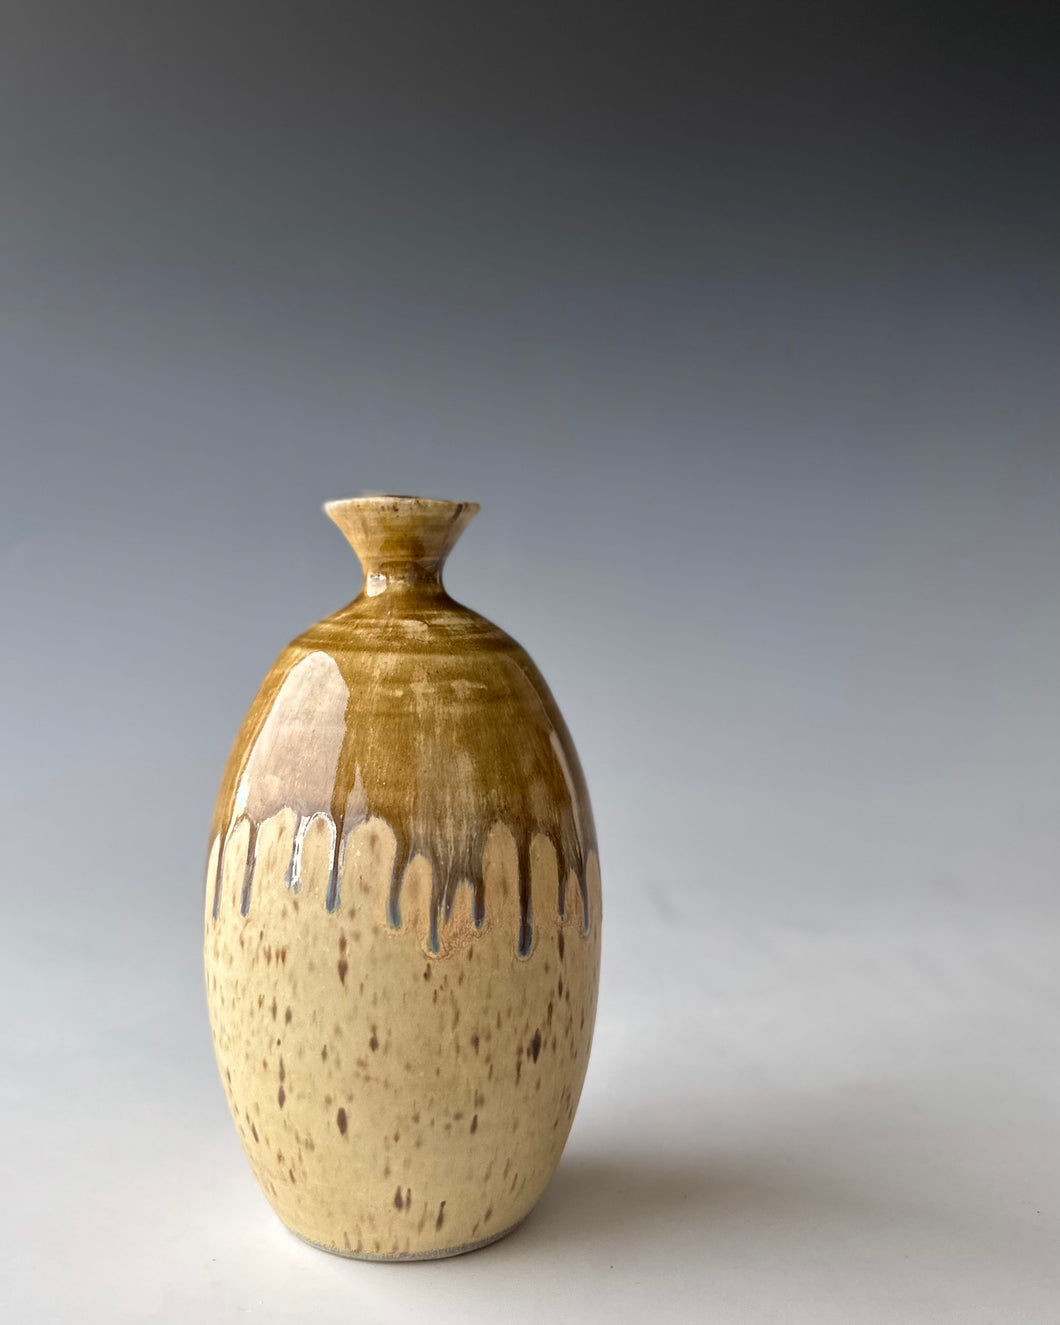 Bottle Vase Collection by KJ MacAlister